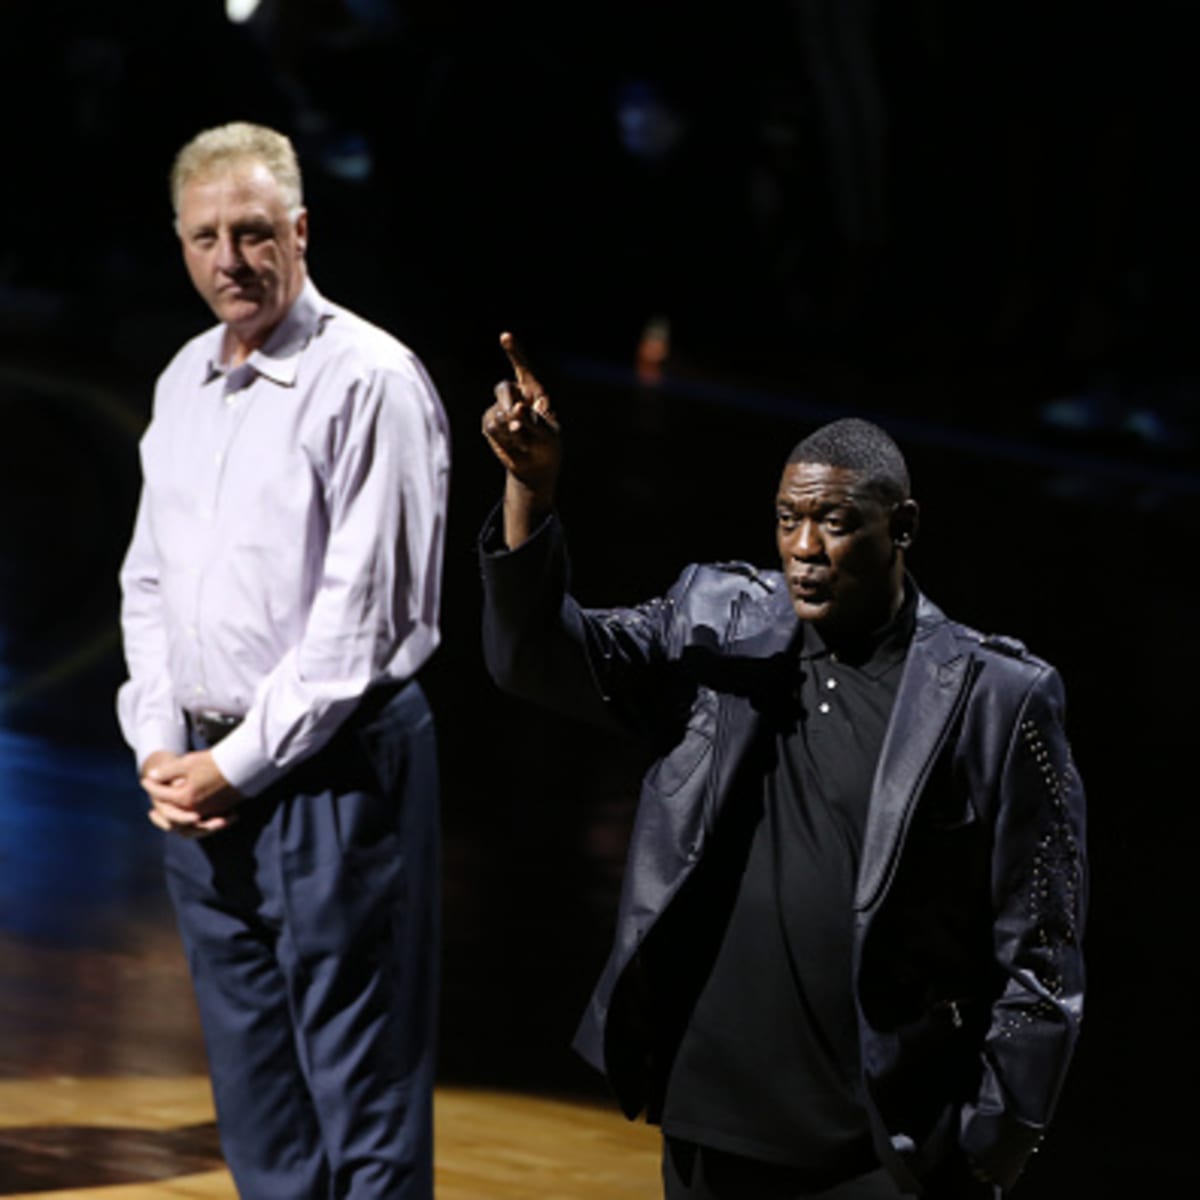 Shawn Kemp Recalls This Celtics Legend's Epic Trash Talk